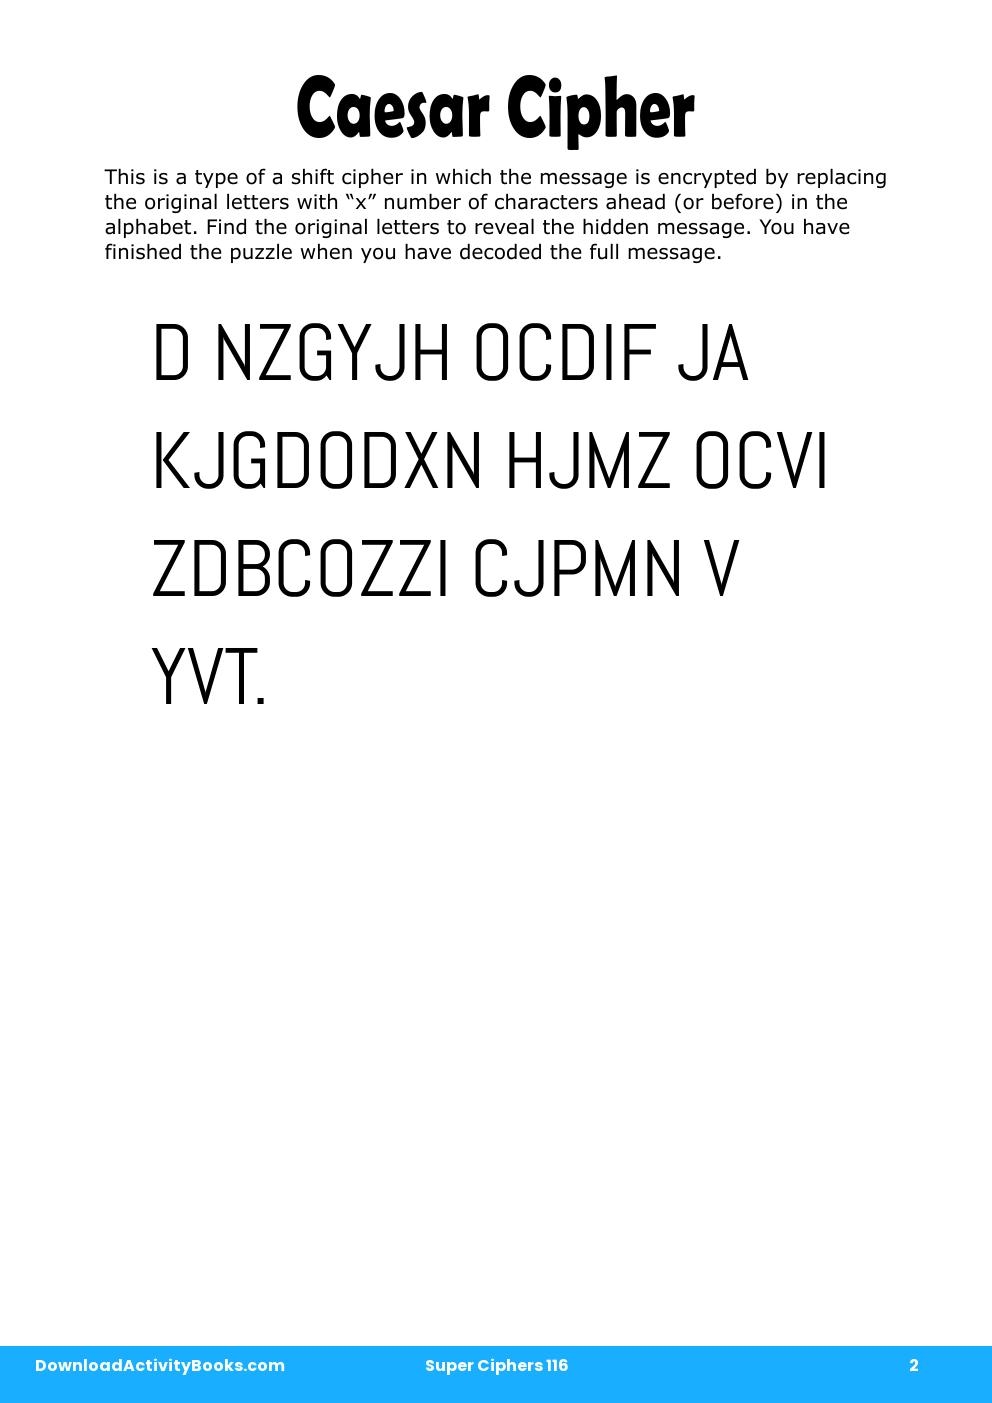 Caesar Cipher in Super Ciphers 116